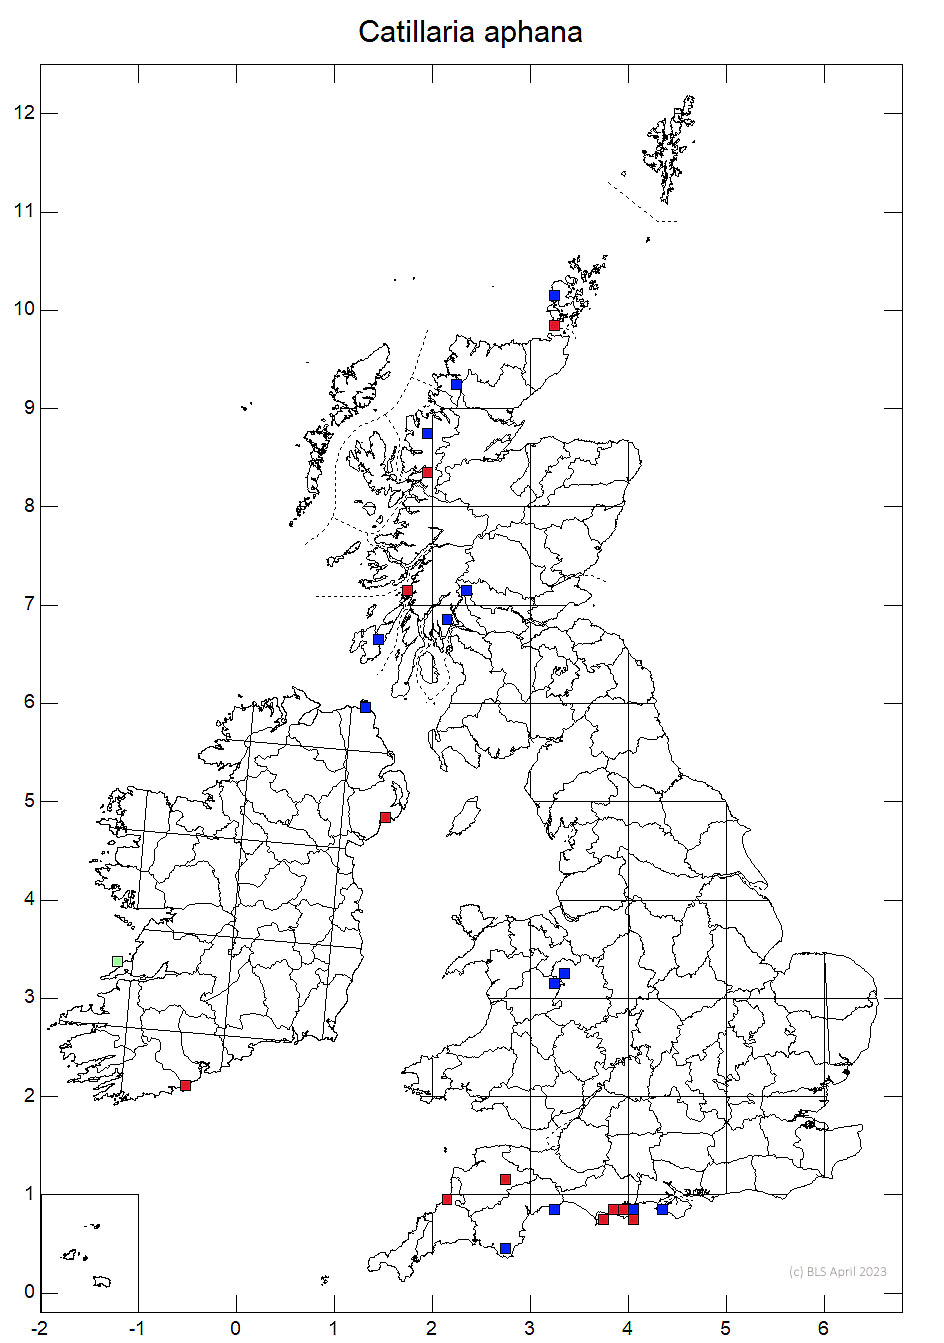 Catillaria aphana 10km sq distribution map